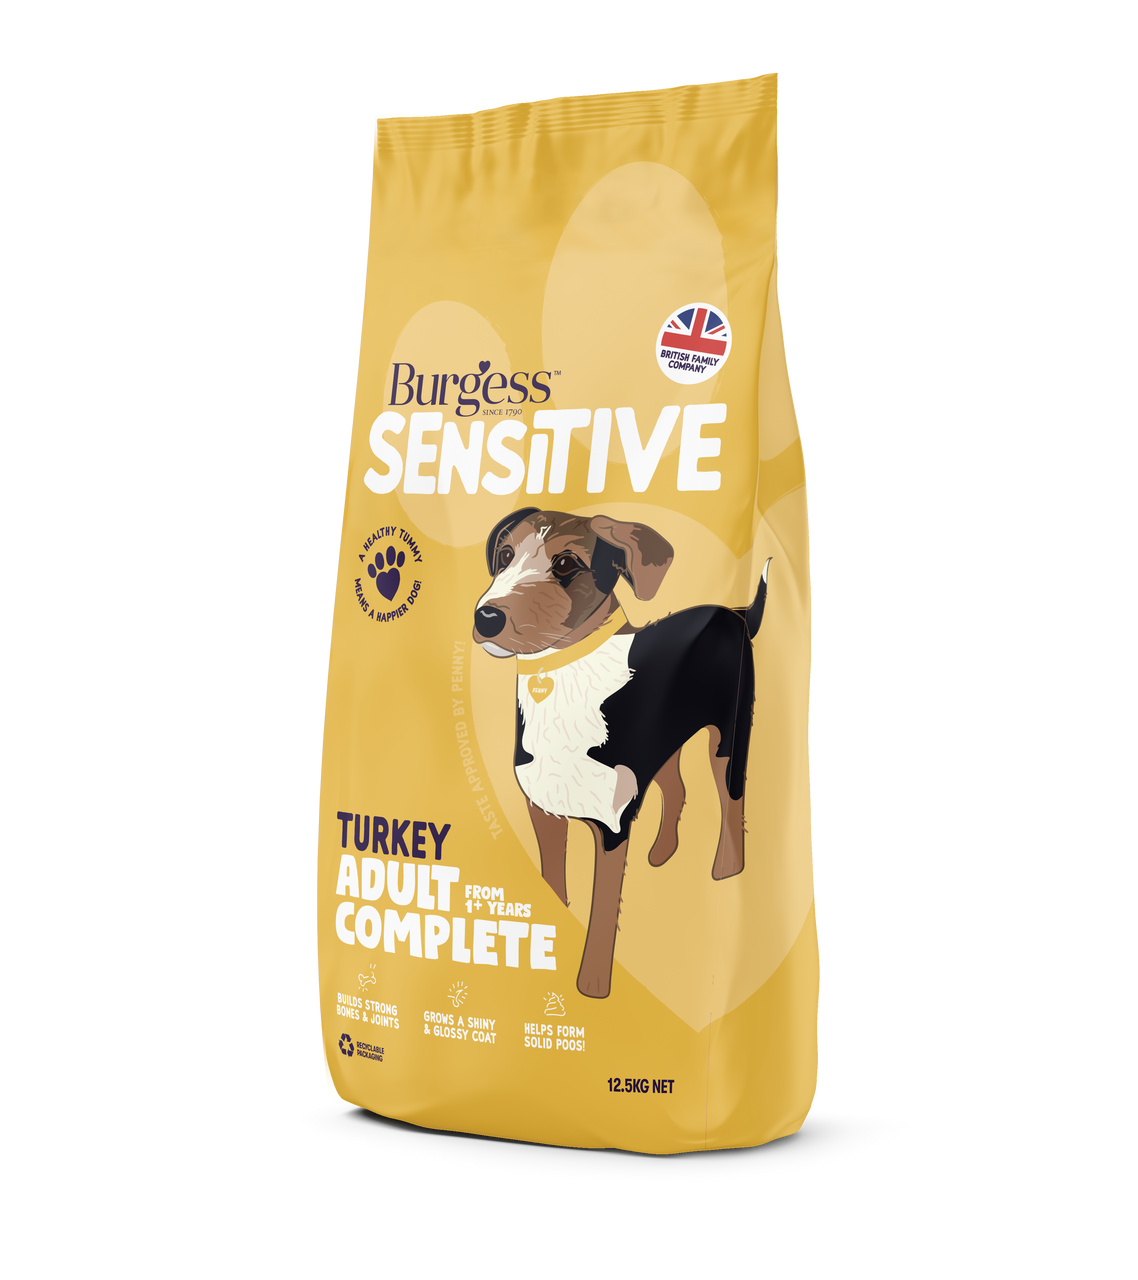 Burgess Sensitive Adult Dog Food 12.5kg - Turkey & Rice  - Dry Dog Food